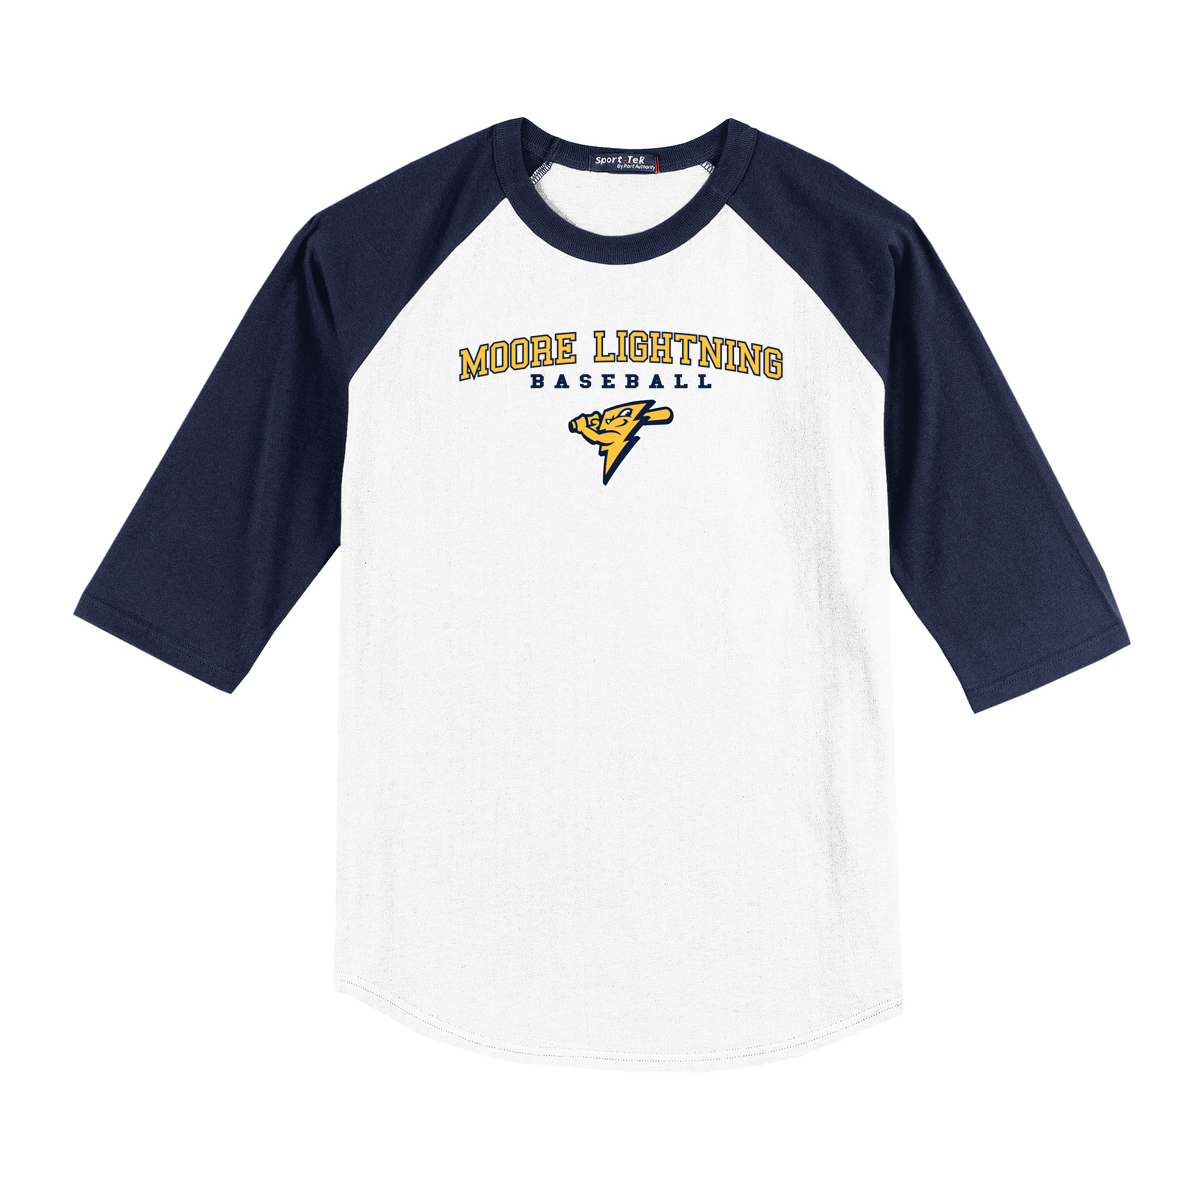 Moore Lightning Baseball  3/4 Sleeve Baseball Shirt